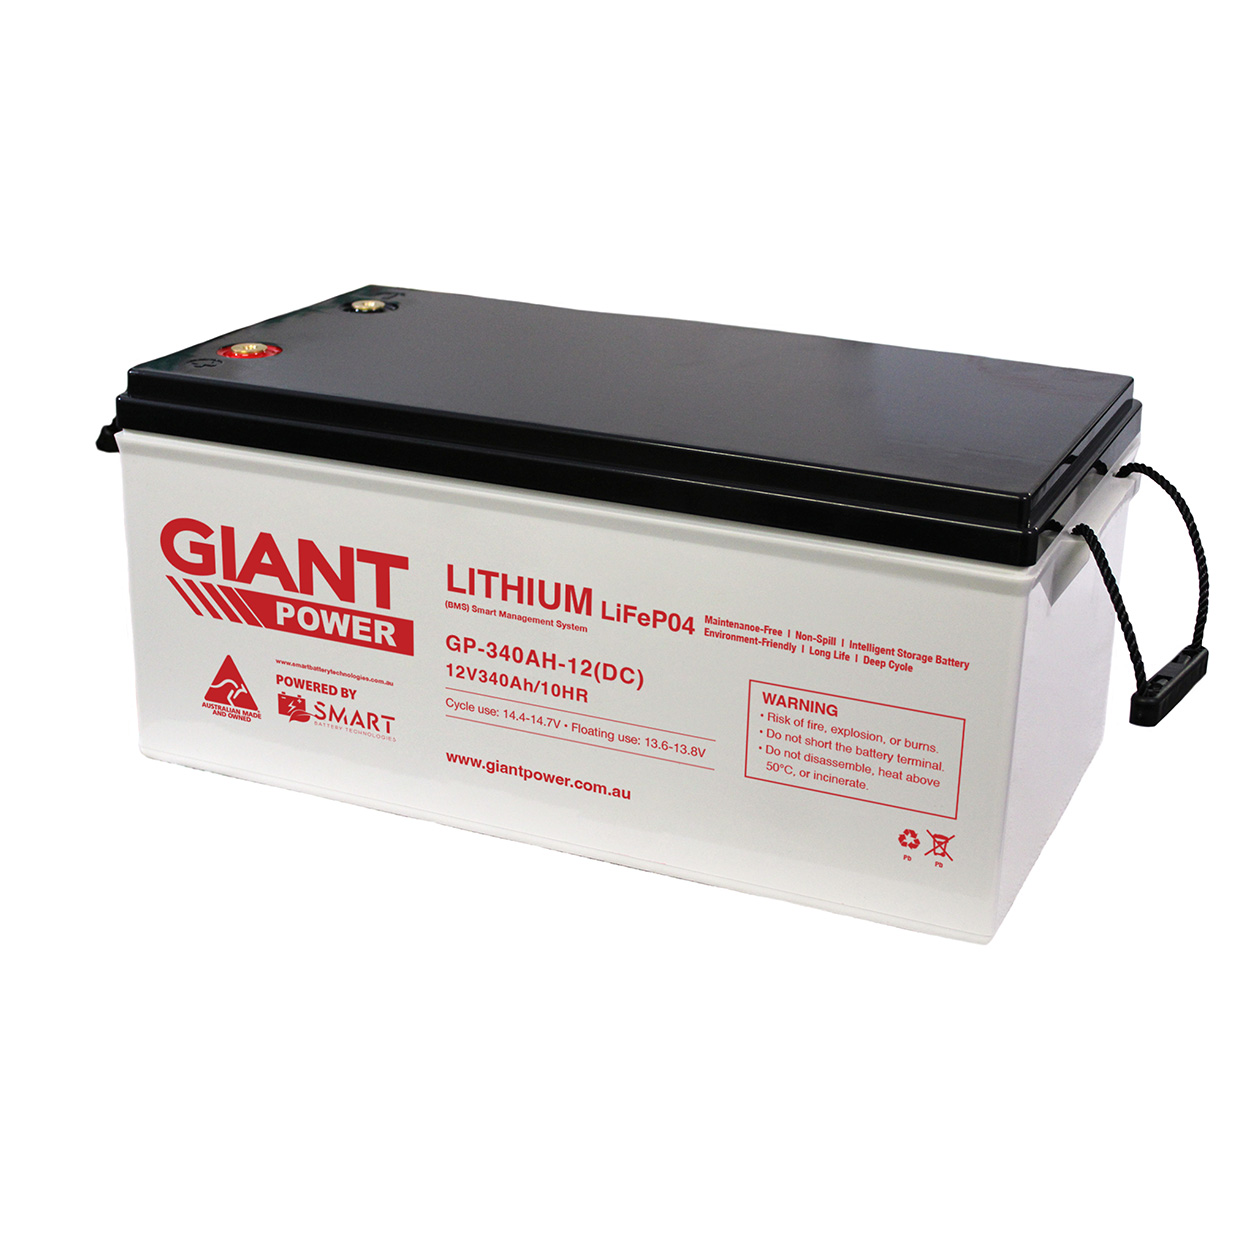 Giant Power 340Ah Lithium Batteries